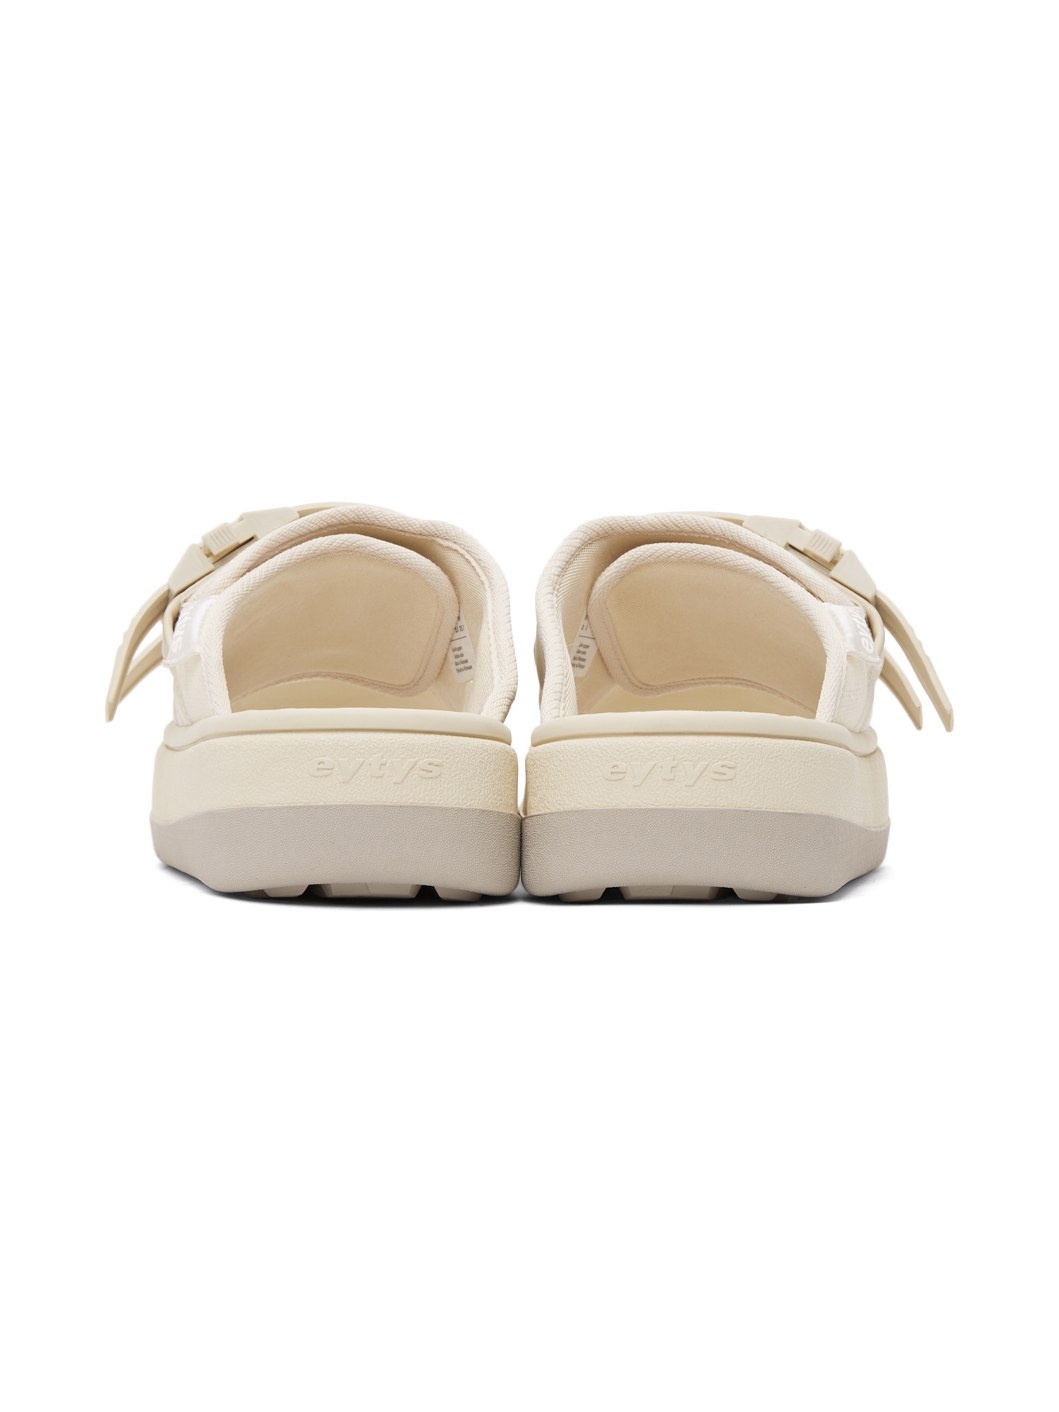 SSENSE Exclusive Off-White Capri Sandals - 4